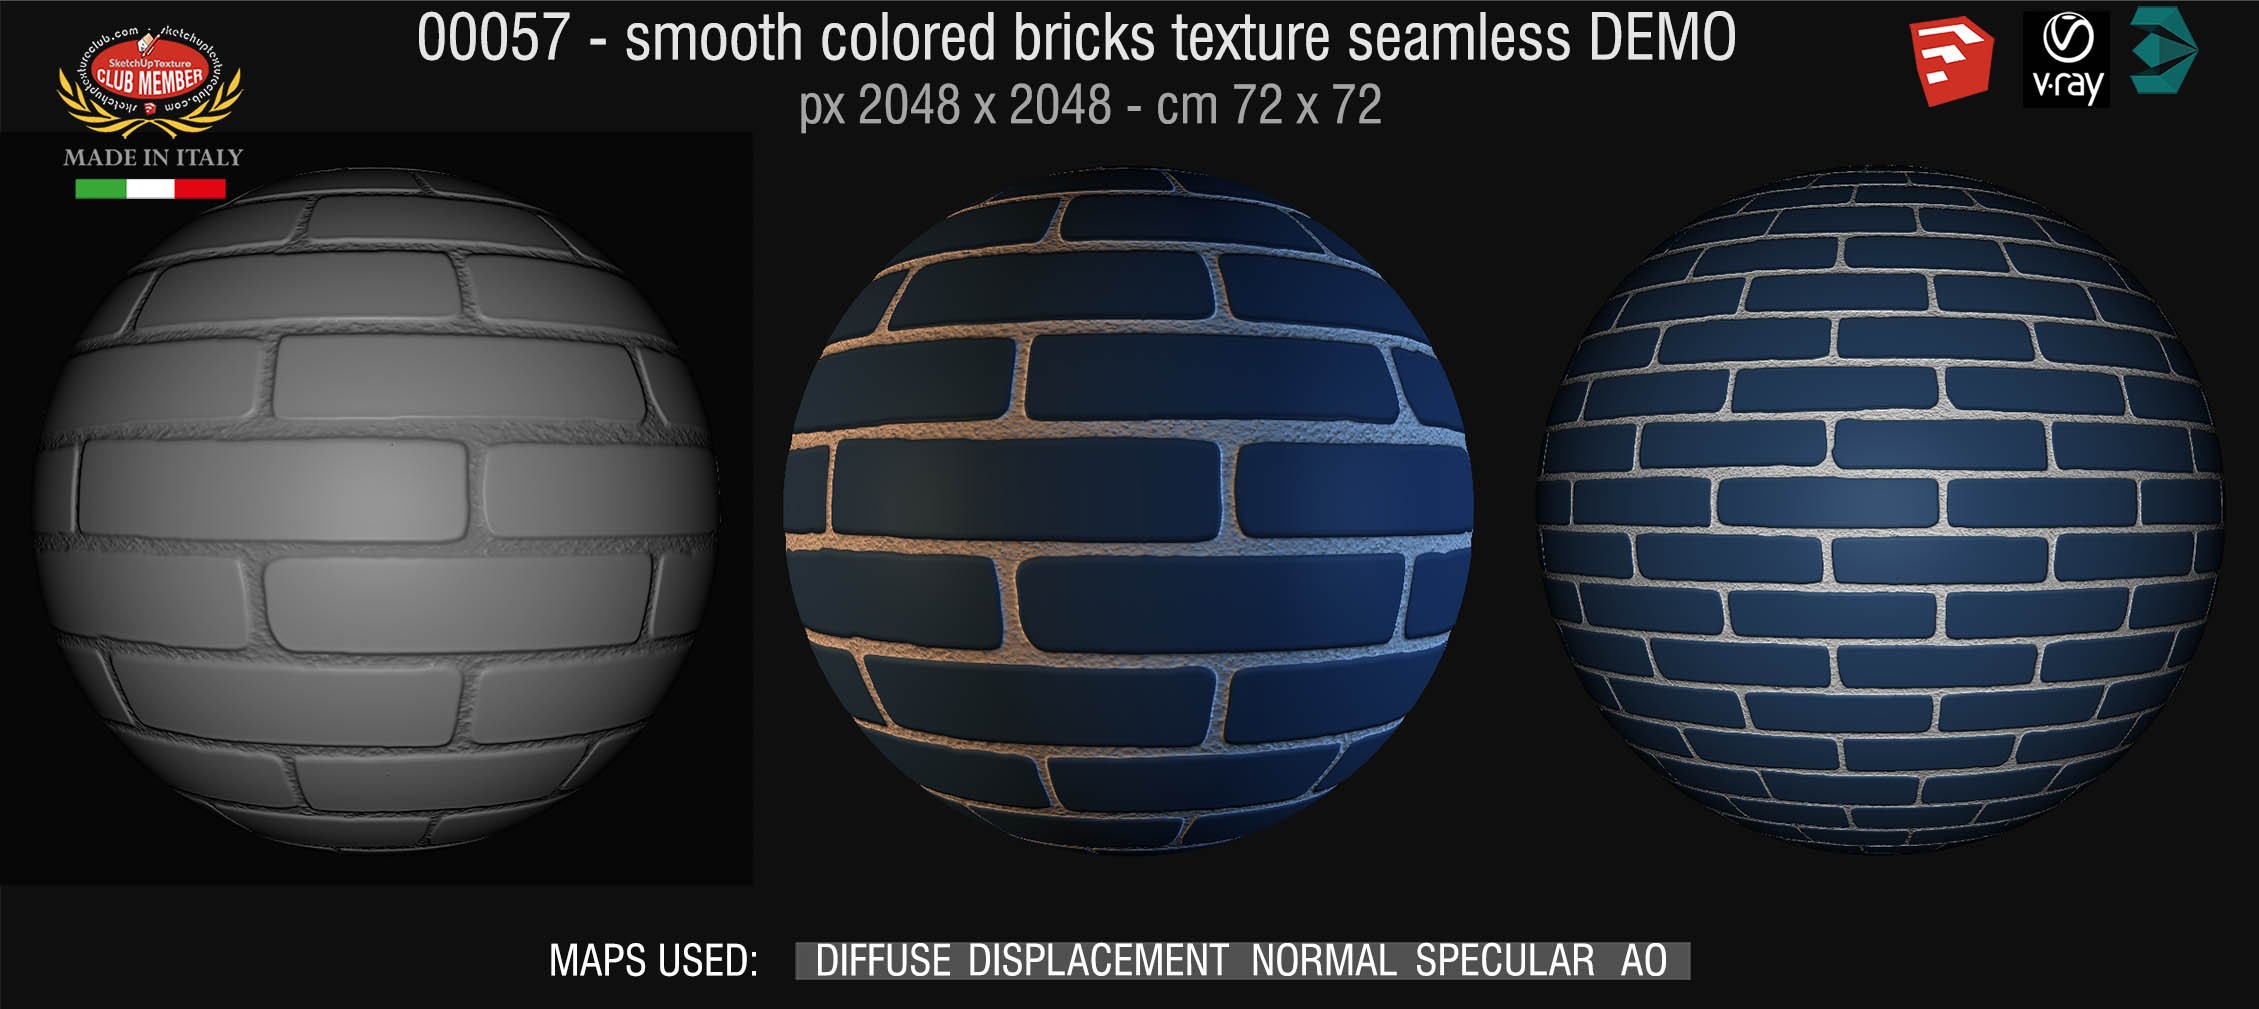 00057 smooth colored bricks texture seamless + maps DEMO